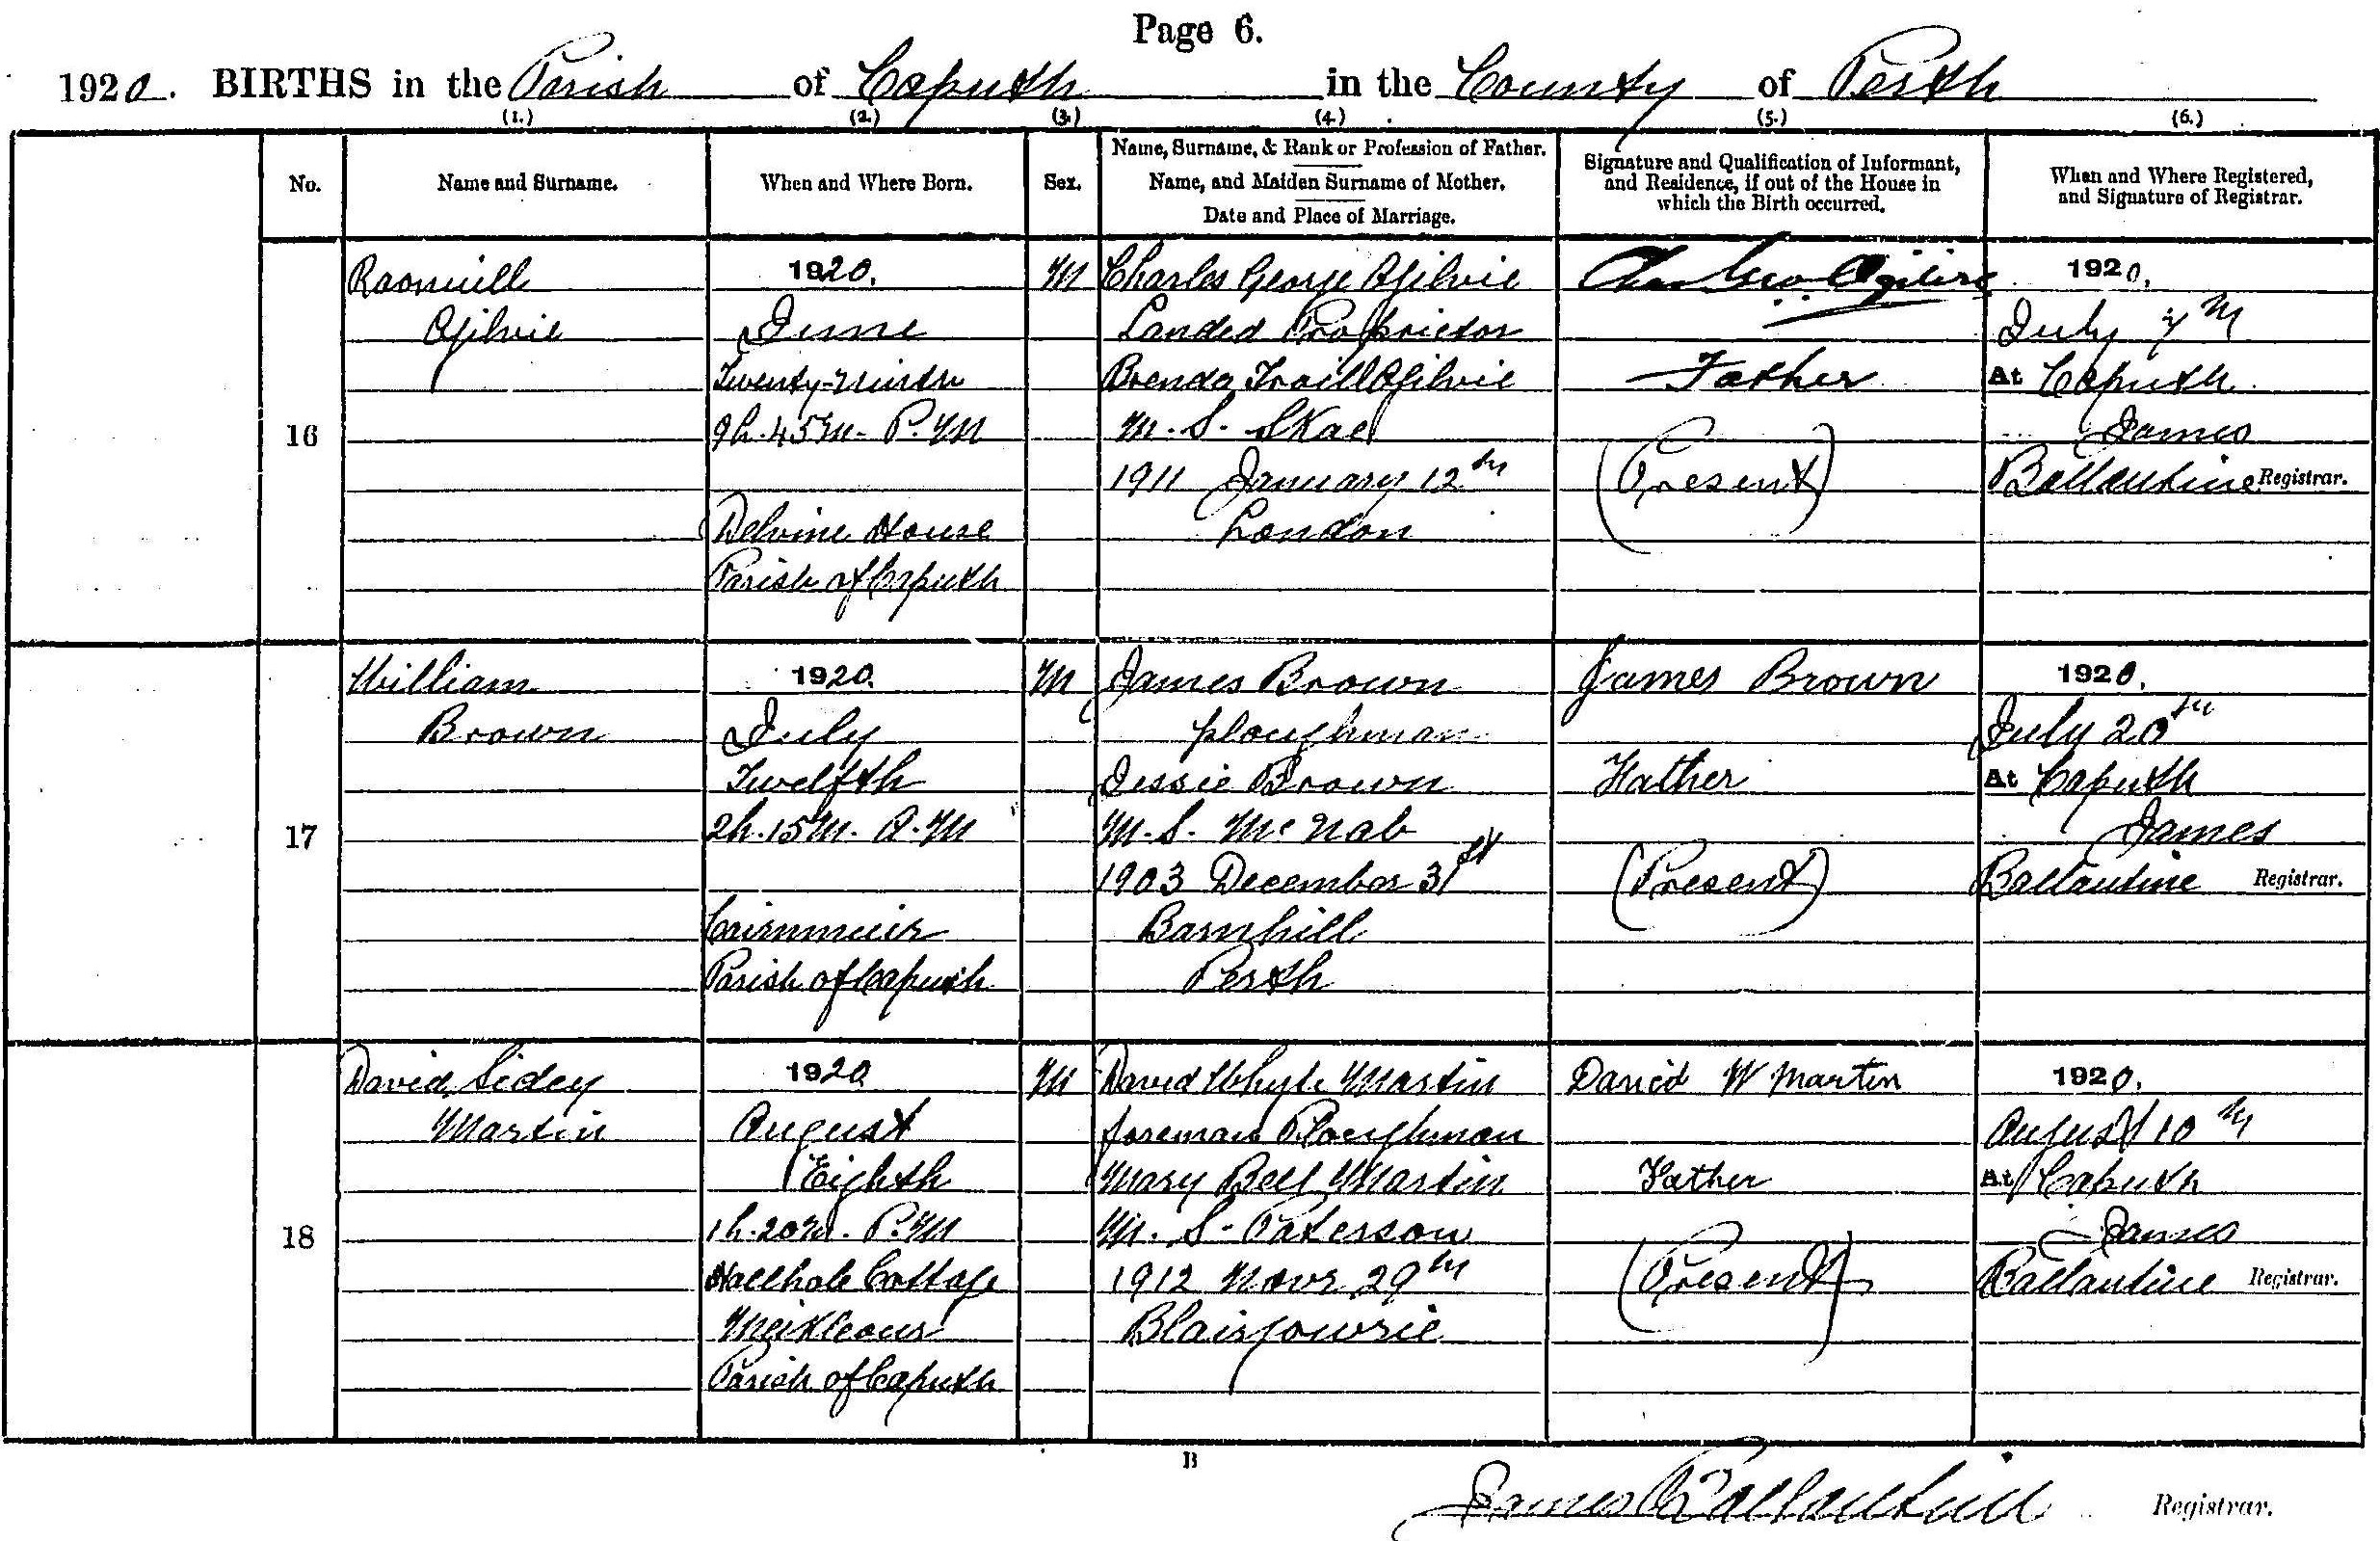 James Ballantine's signature in the Statutory Register of Births, 1920